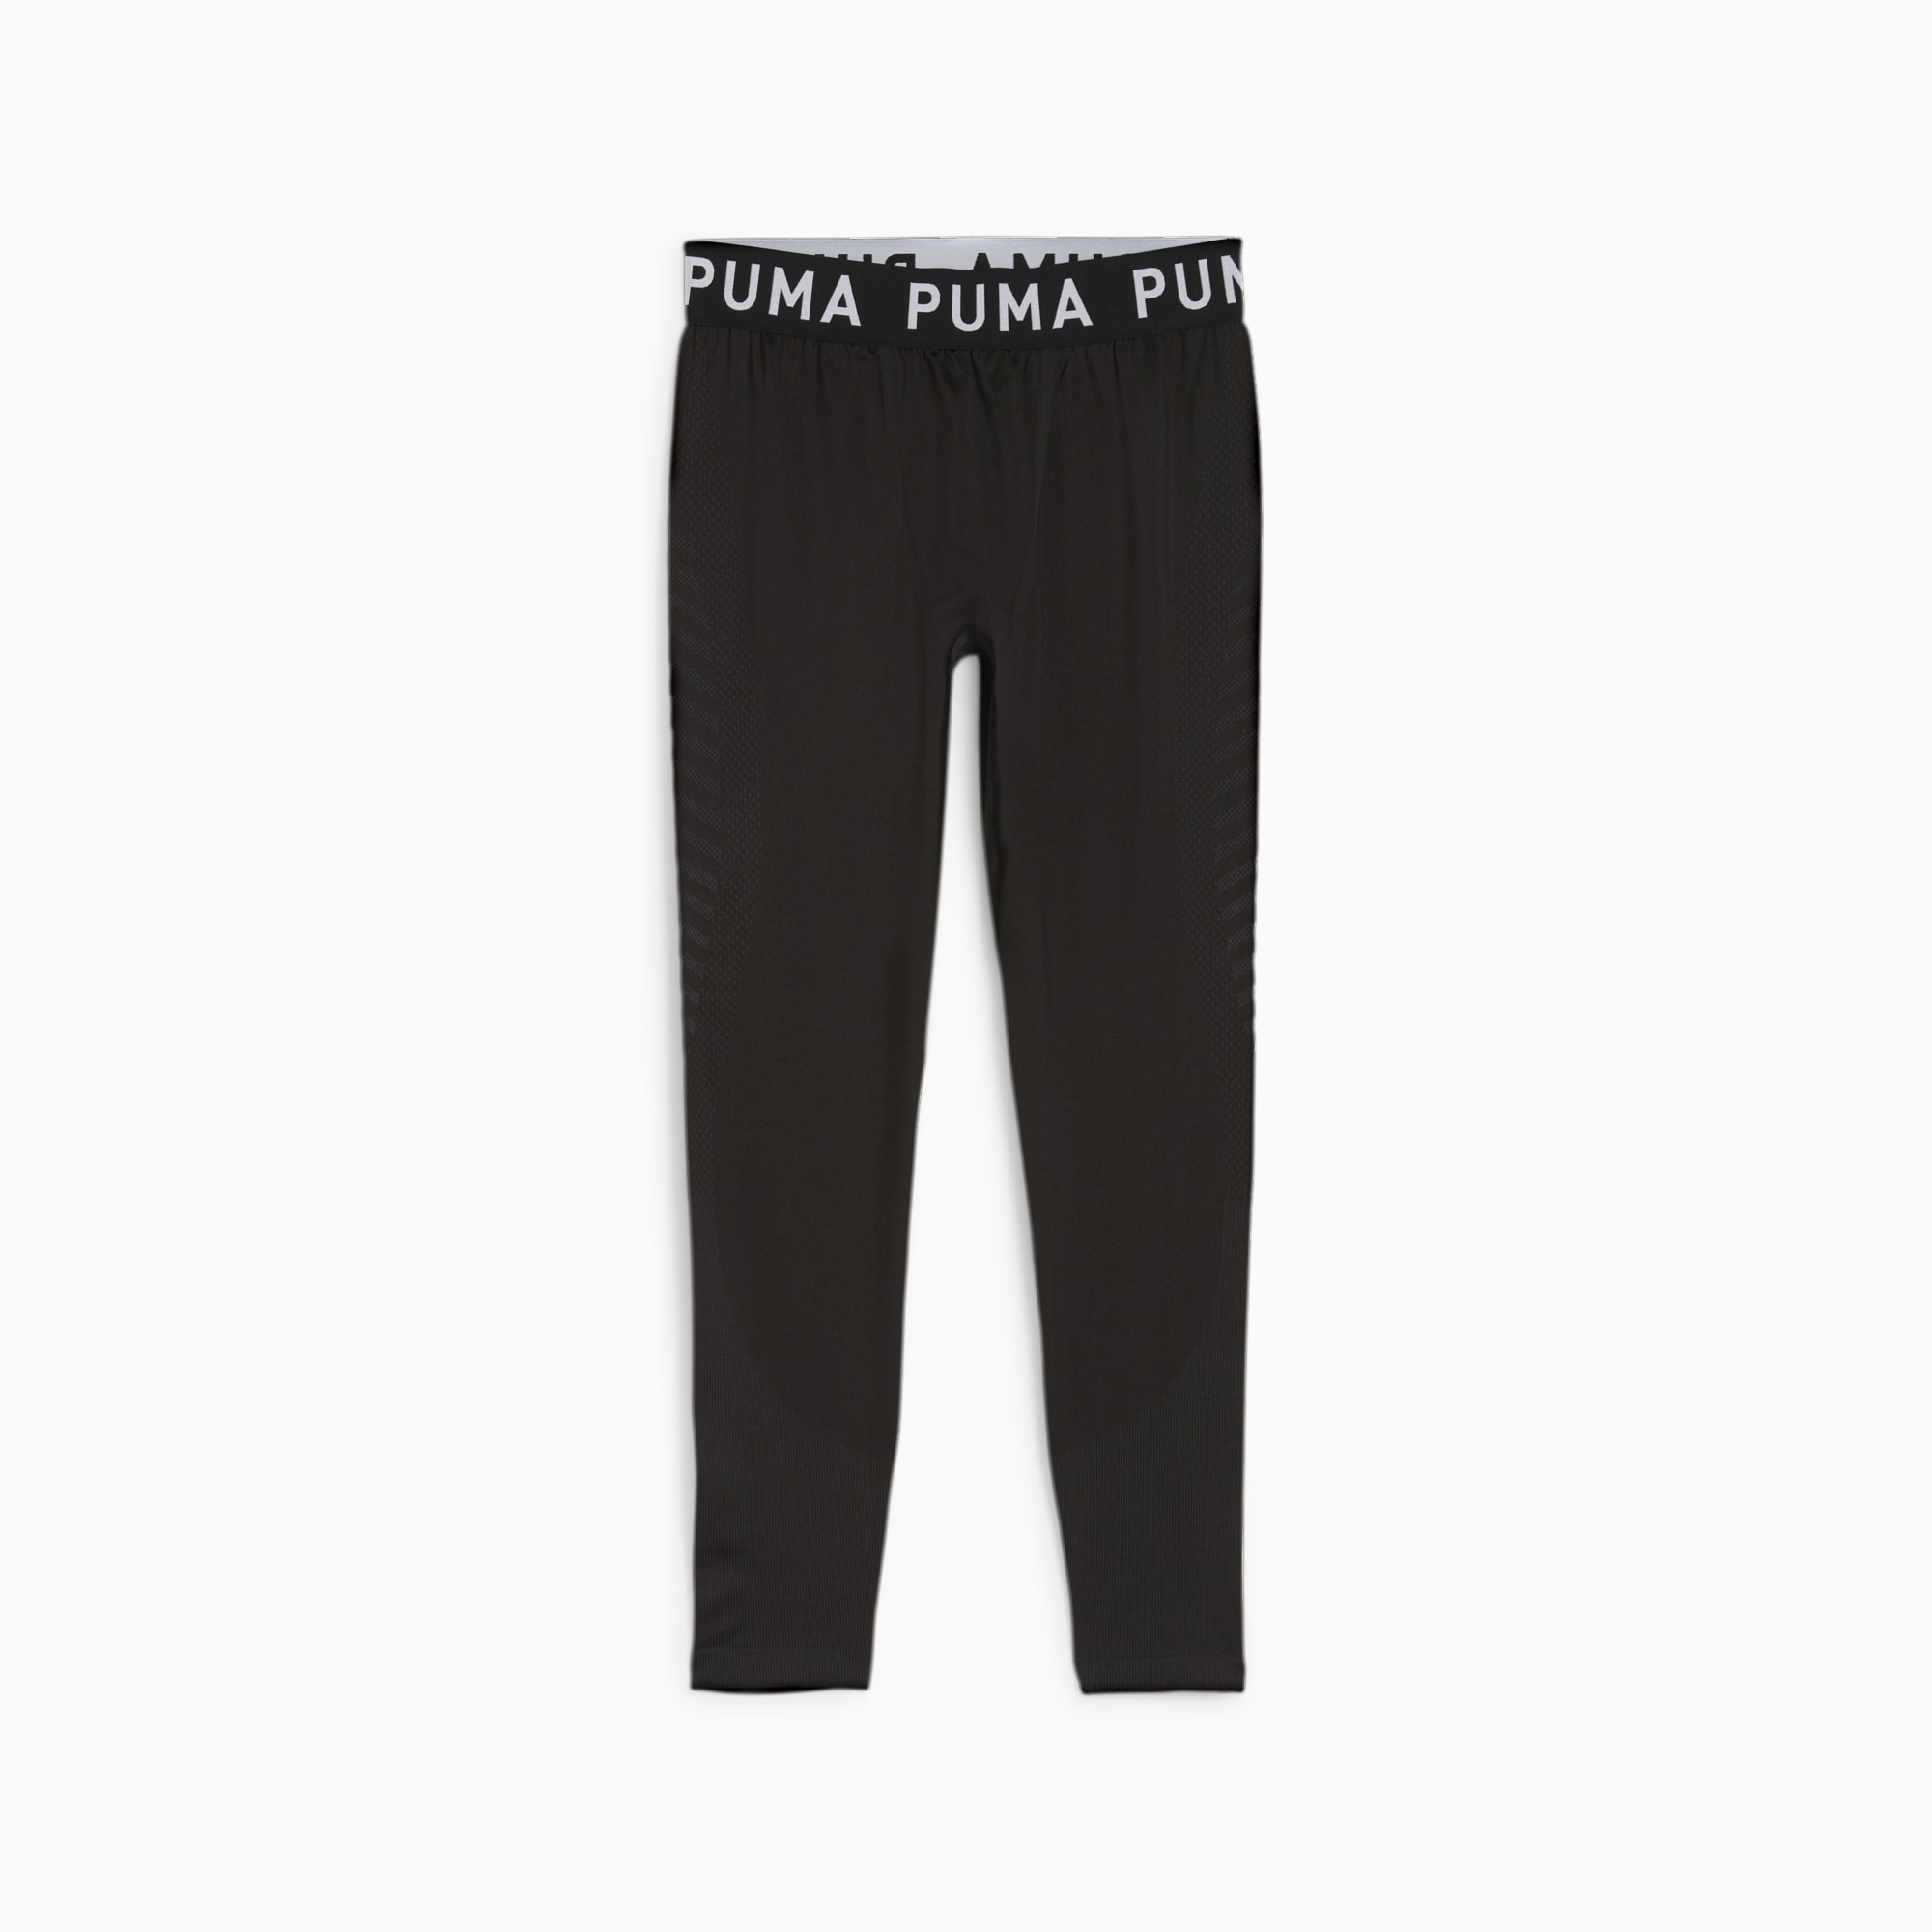 PUMA Formknit Seamless Long Men's Training Tights, Black/White, Size S, Clothing